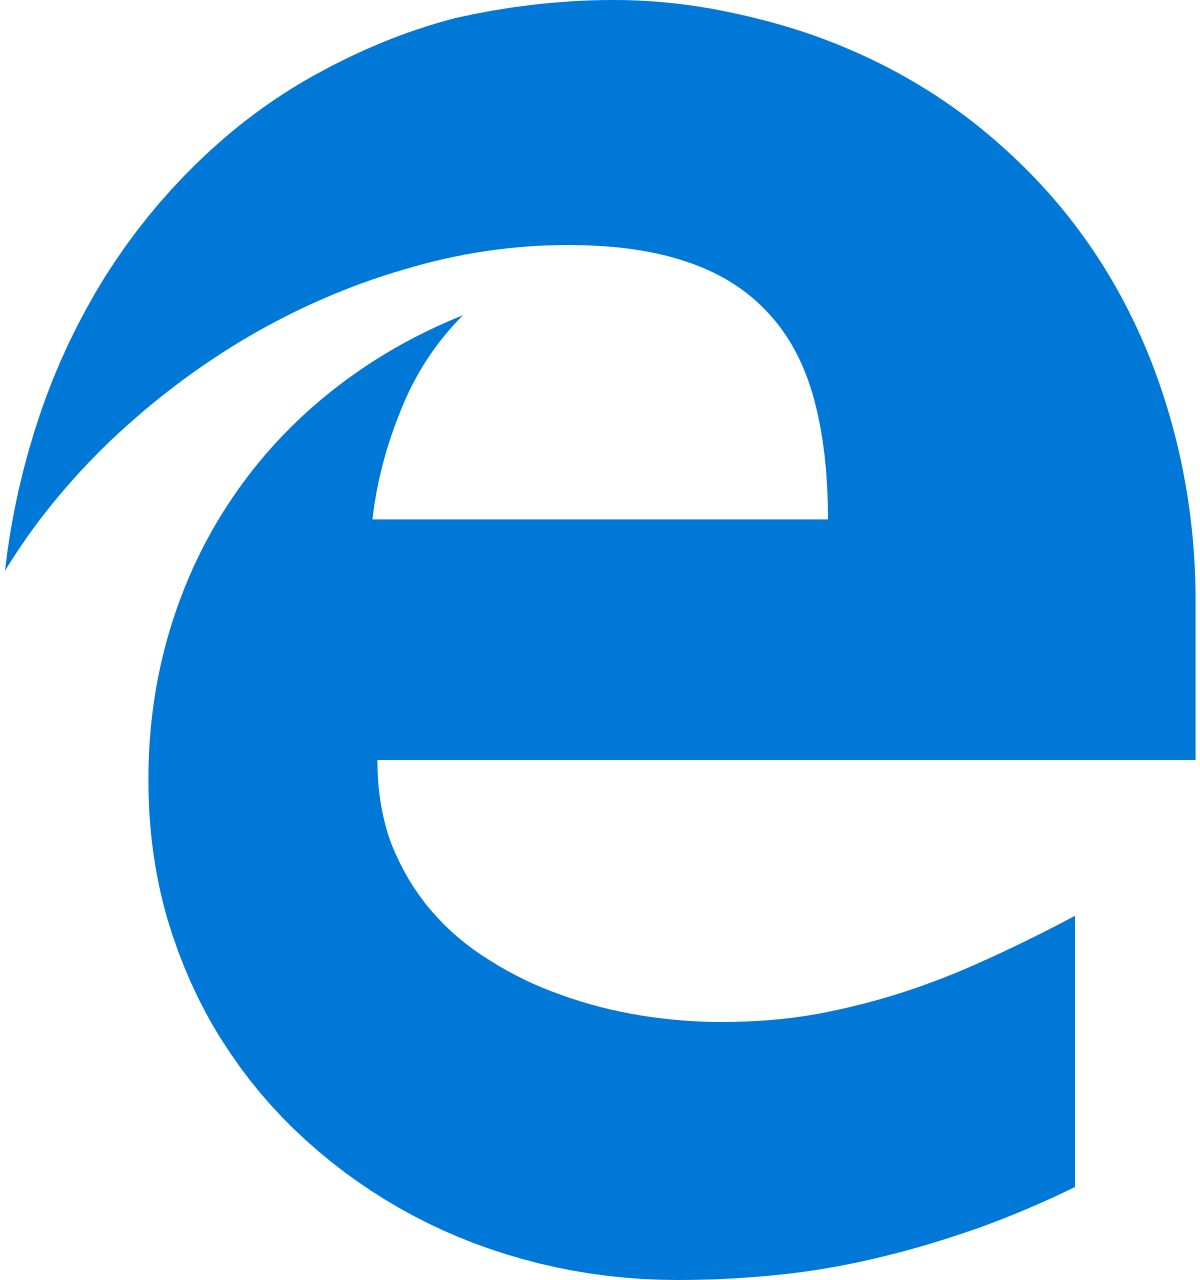 Microsoft Edge browser icon